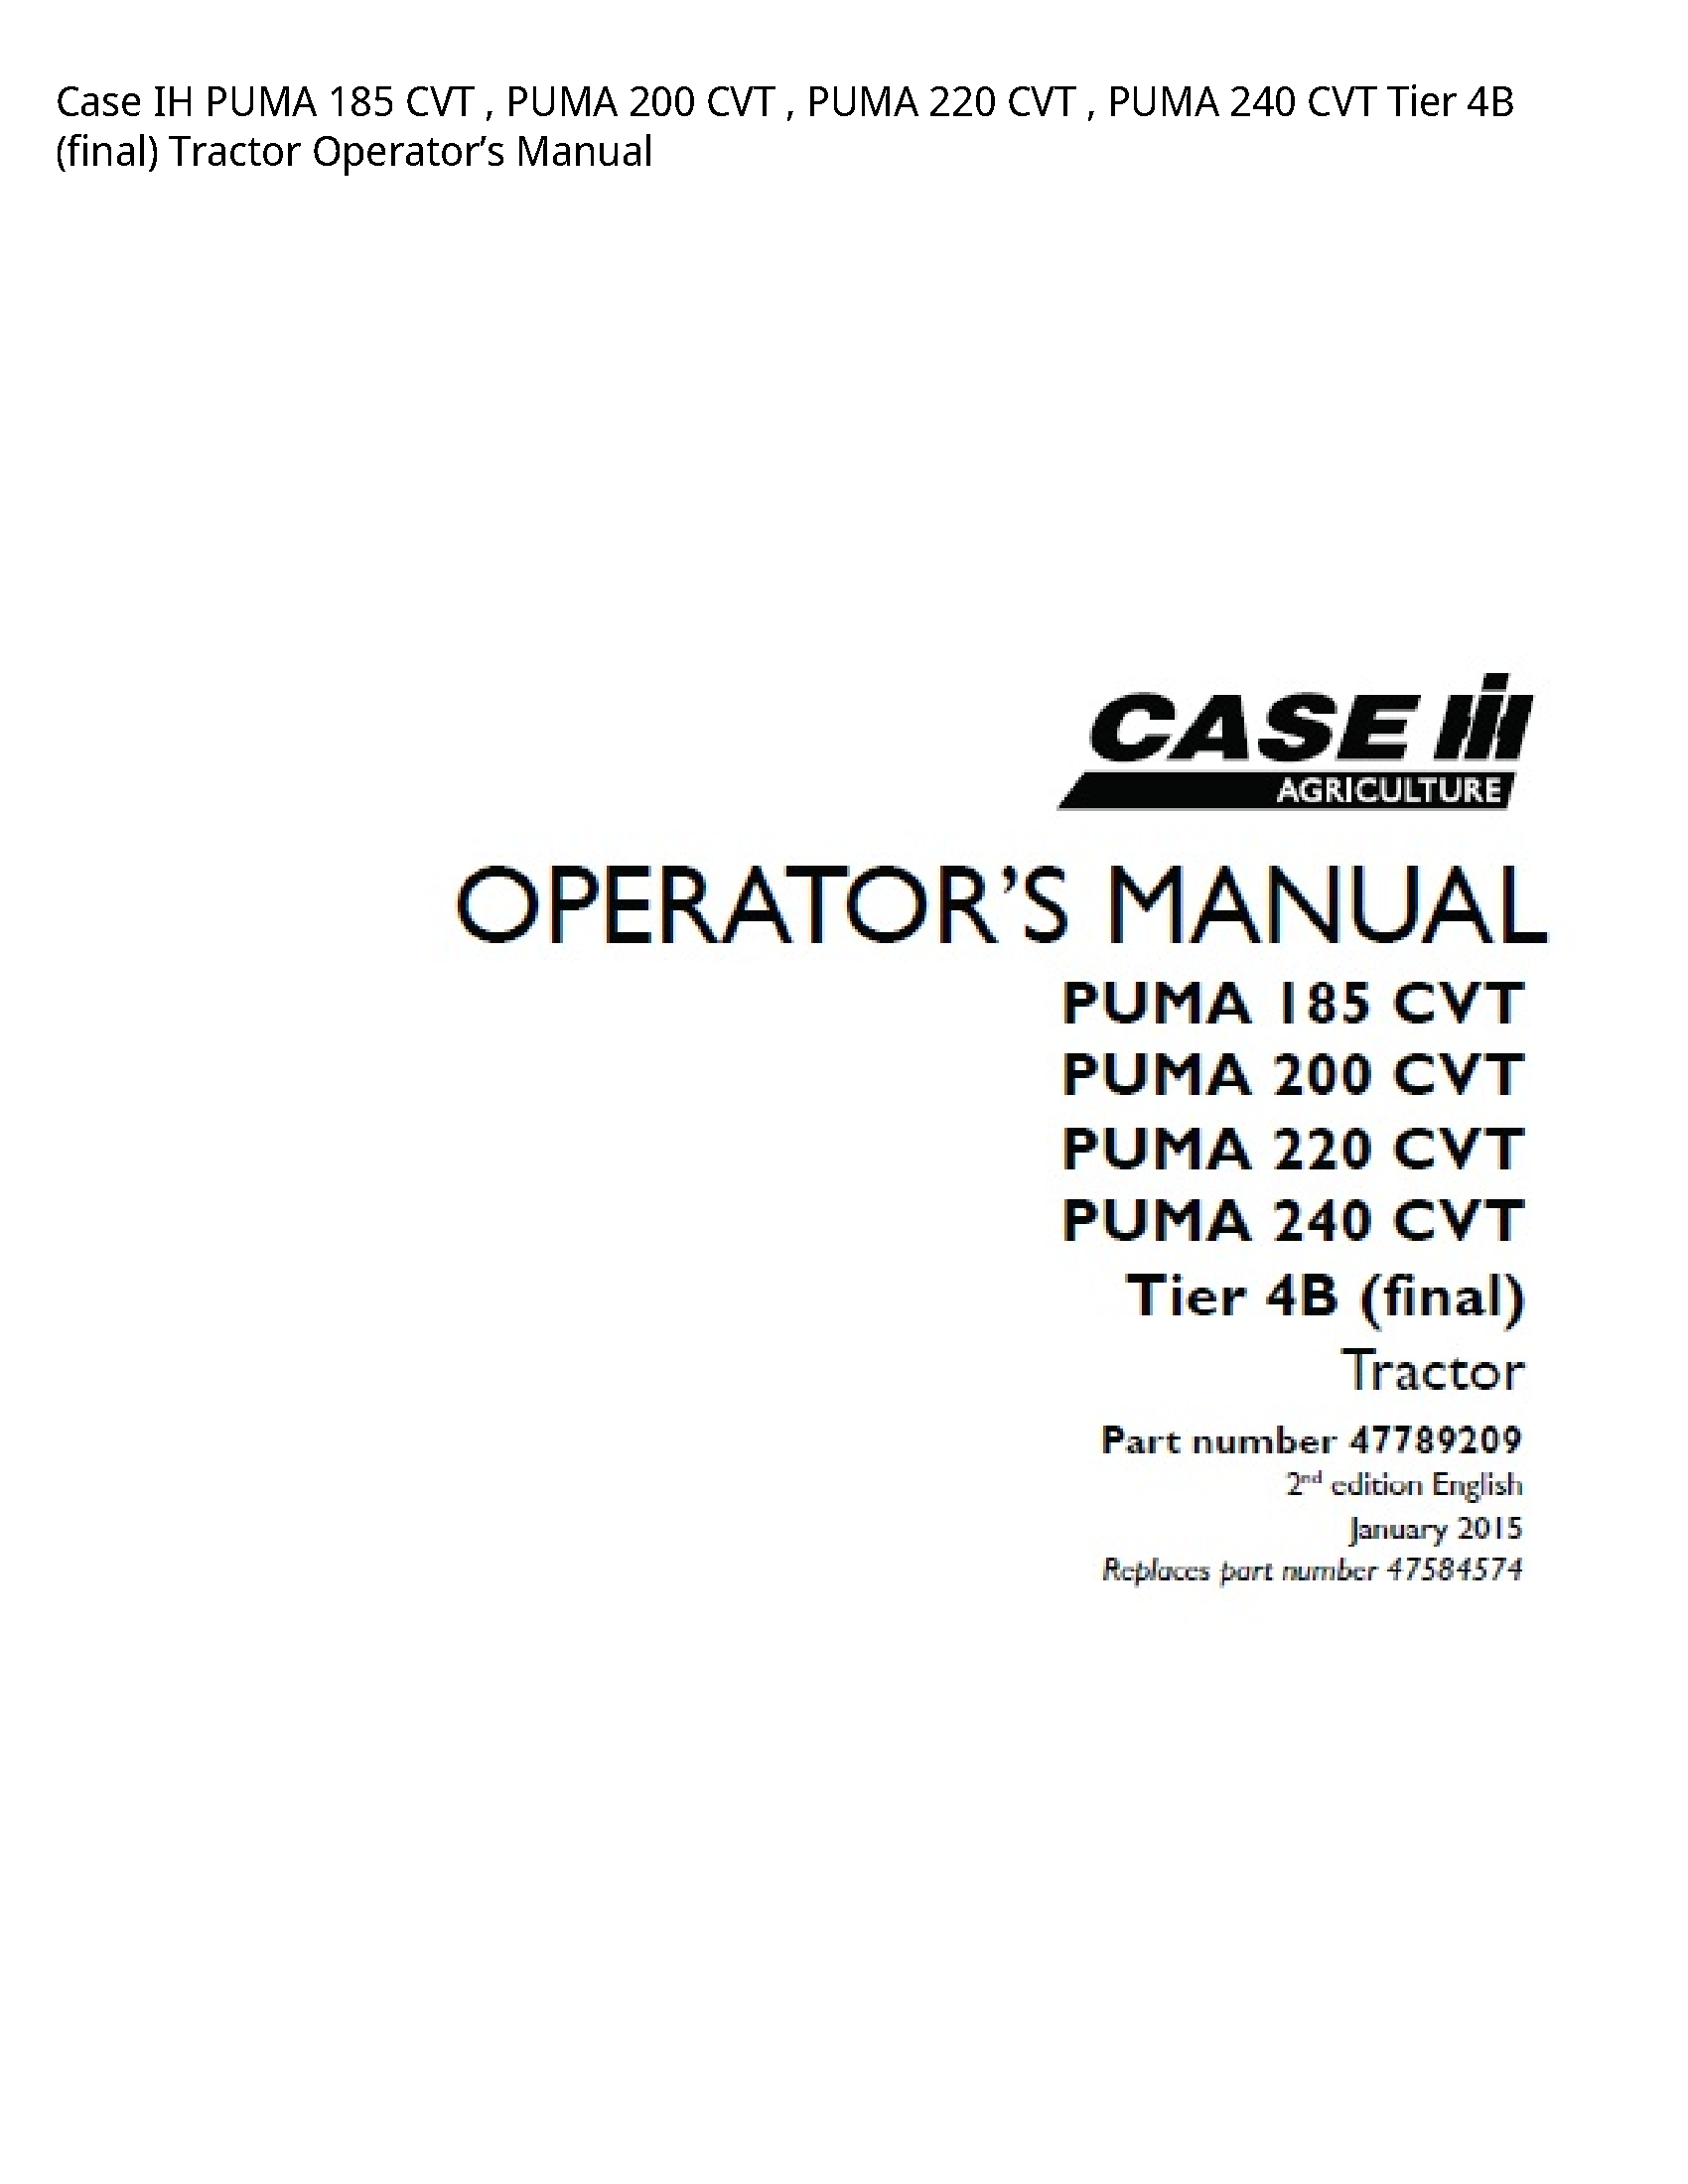 Case/Case IH 185 IH PUMA CVT PUMA CVT PUMA CVT PUMA CVT Tier (final) Tractor Operator’s manual